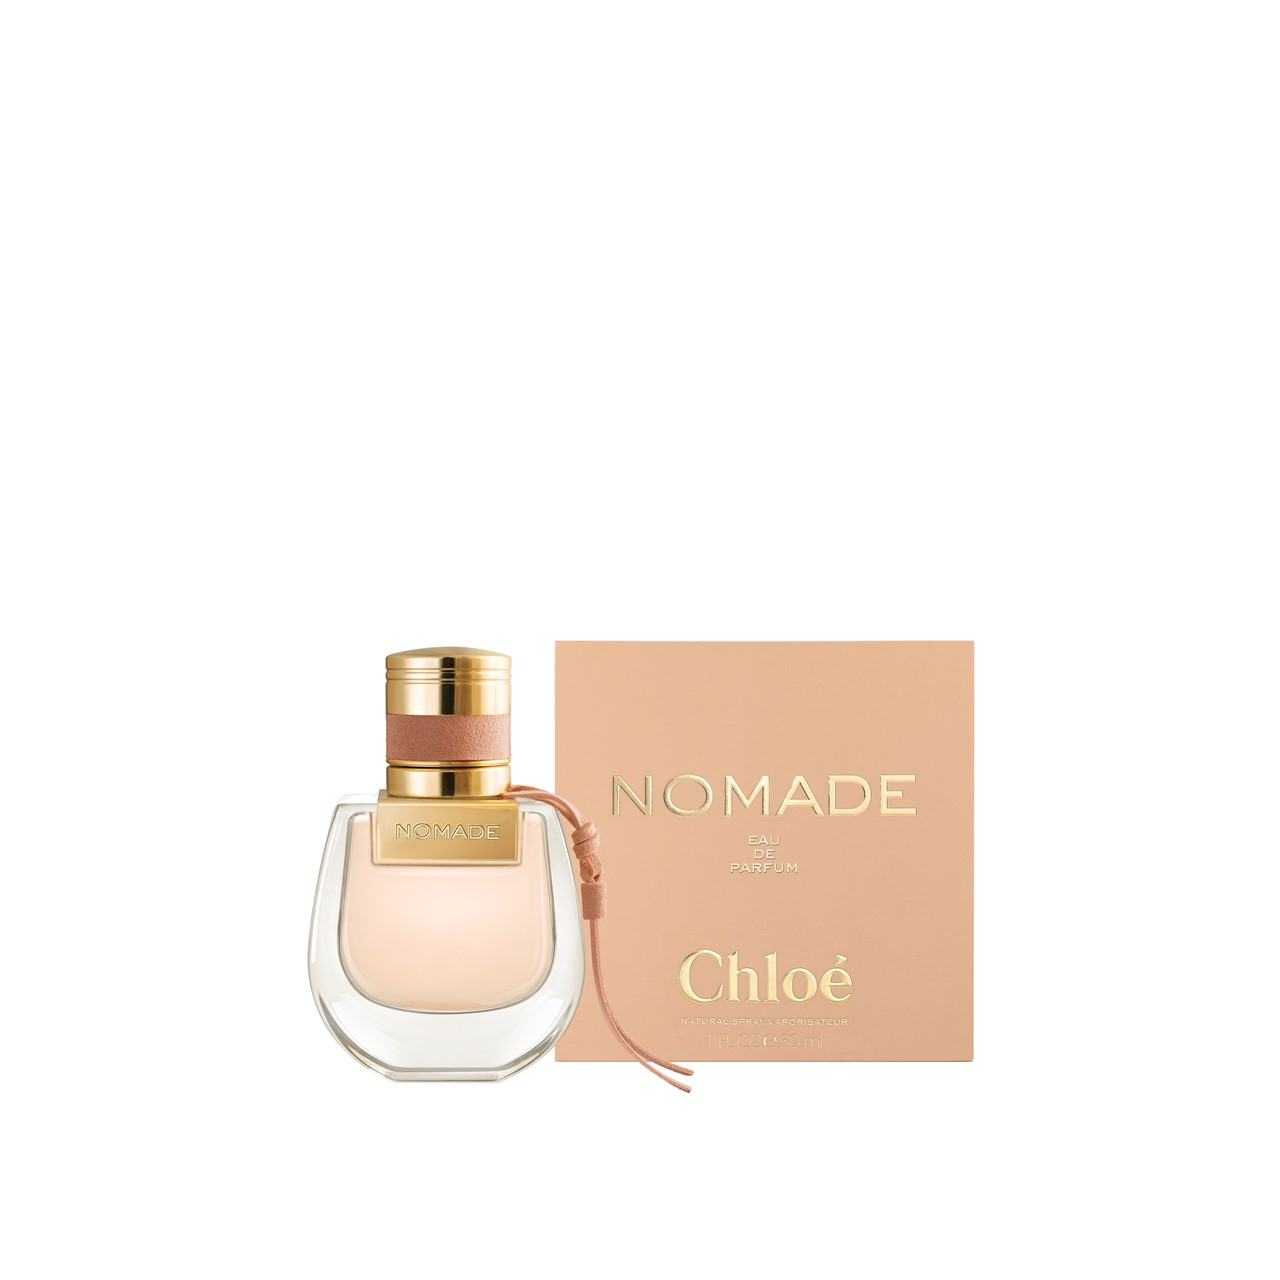 Chloé Nomade Eau de Parfum 30ml (1.0fl oz)